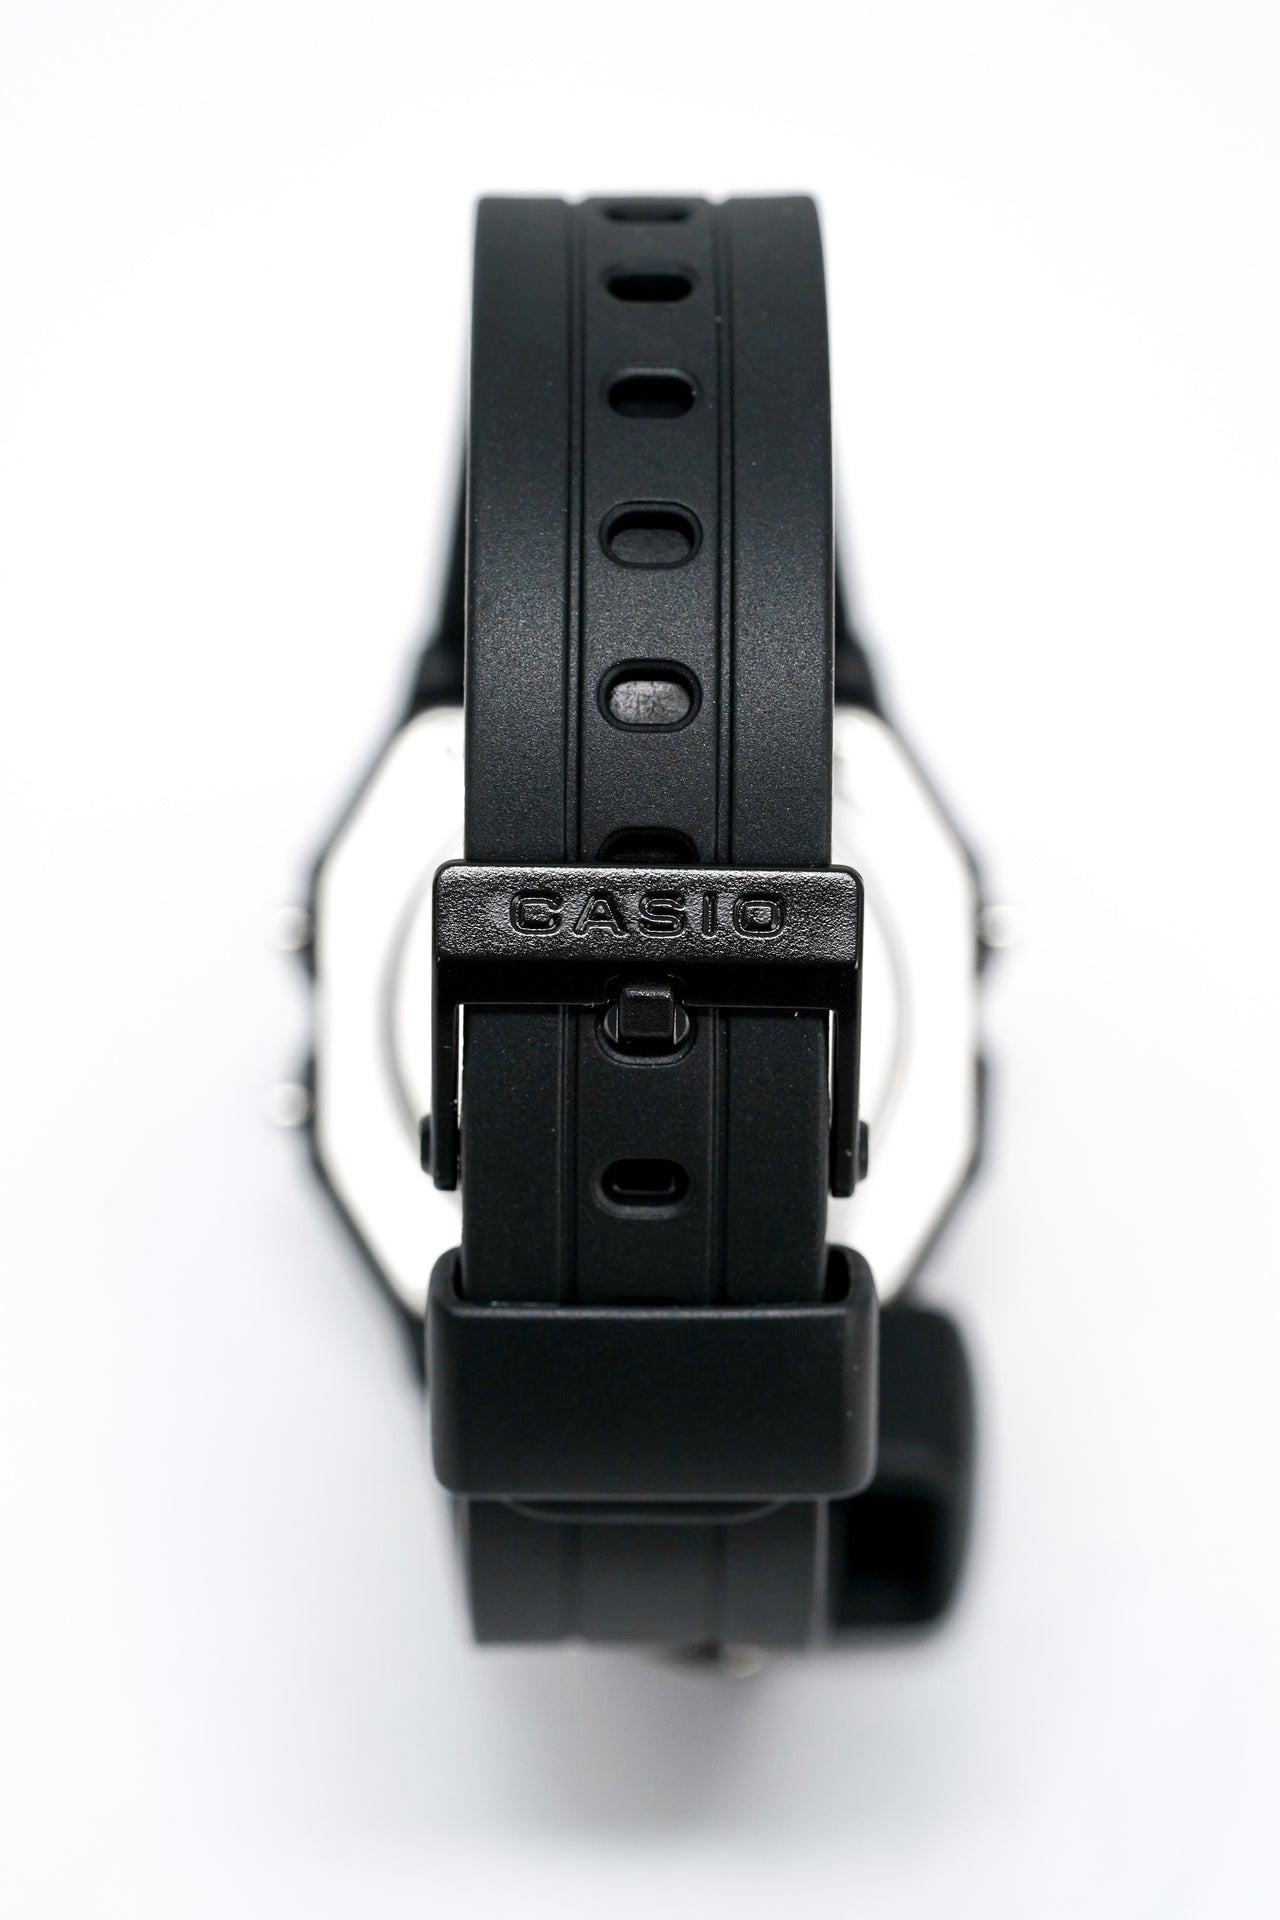 Casio Watch Classic Sports Digital Black/Green F-91W-3DG